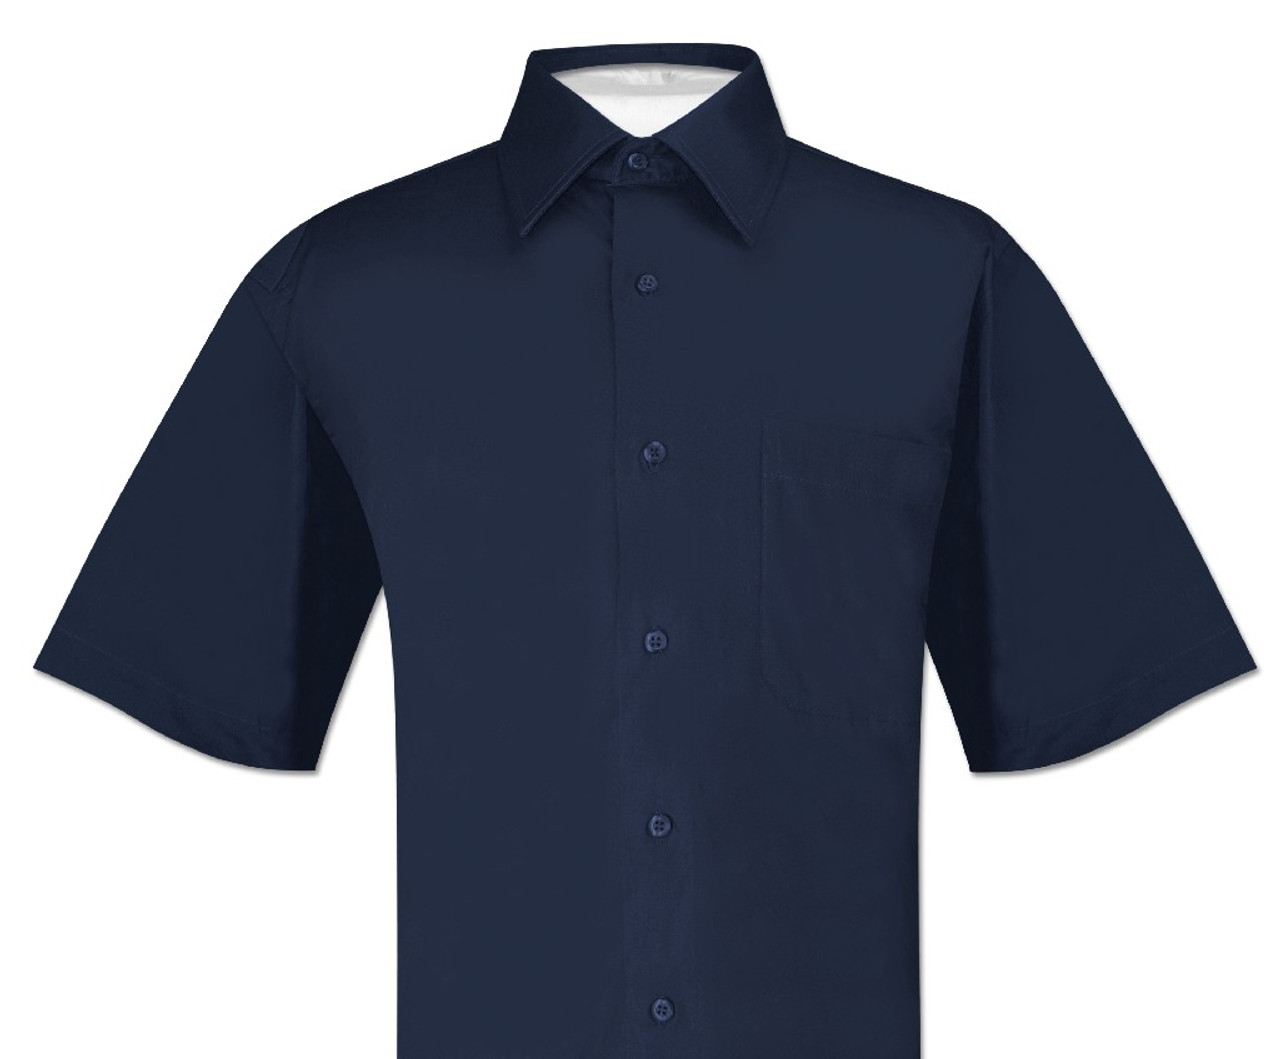 Navy Blue Mens Short Sleeve Dress Shirt | Biagio 100% Cotton Shirt